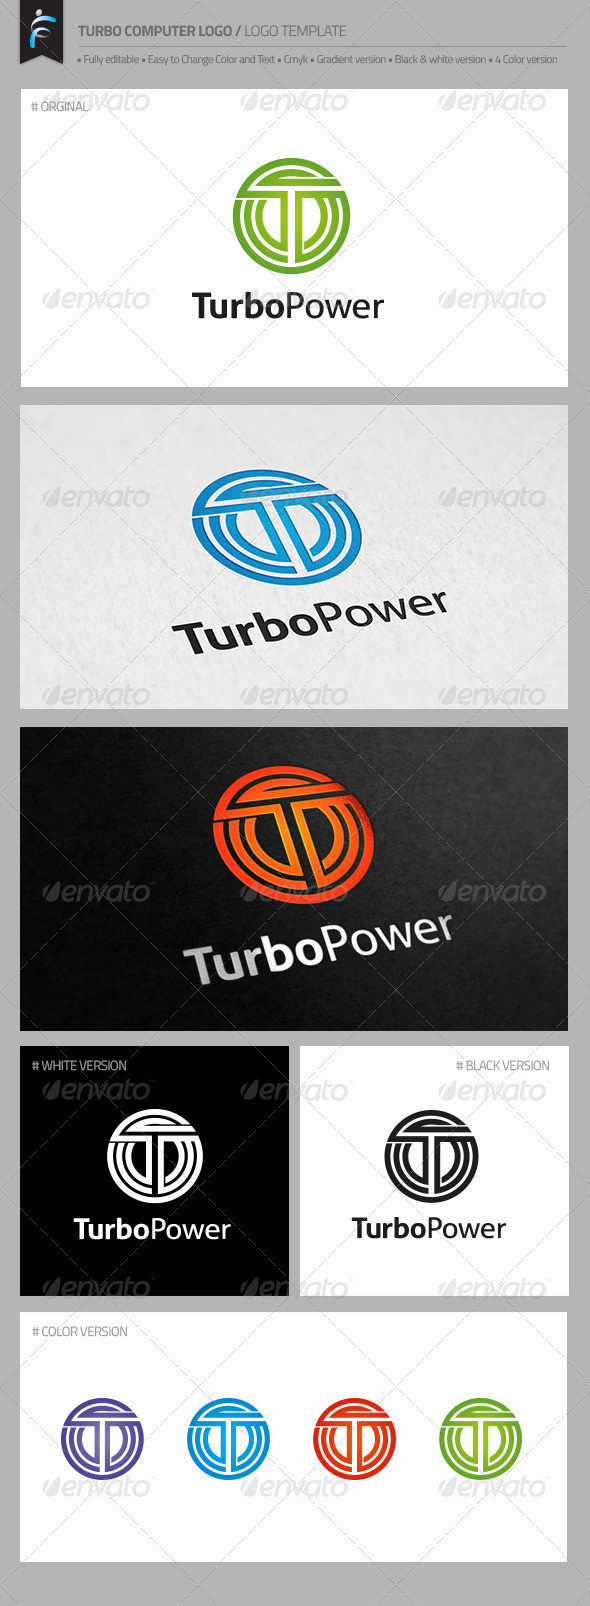 Turbo power logo